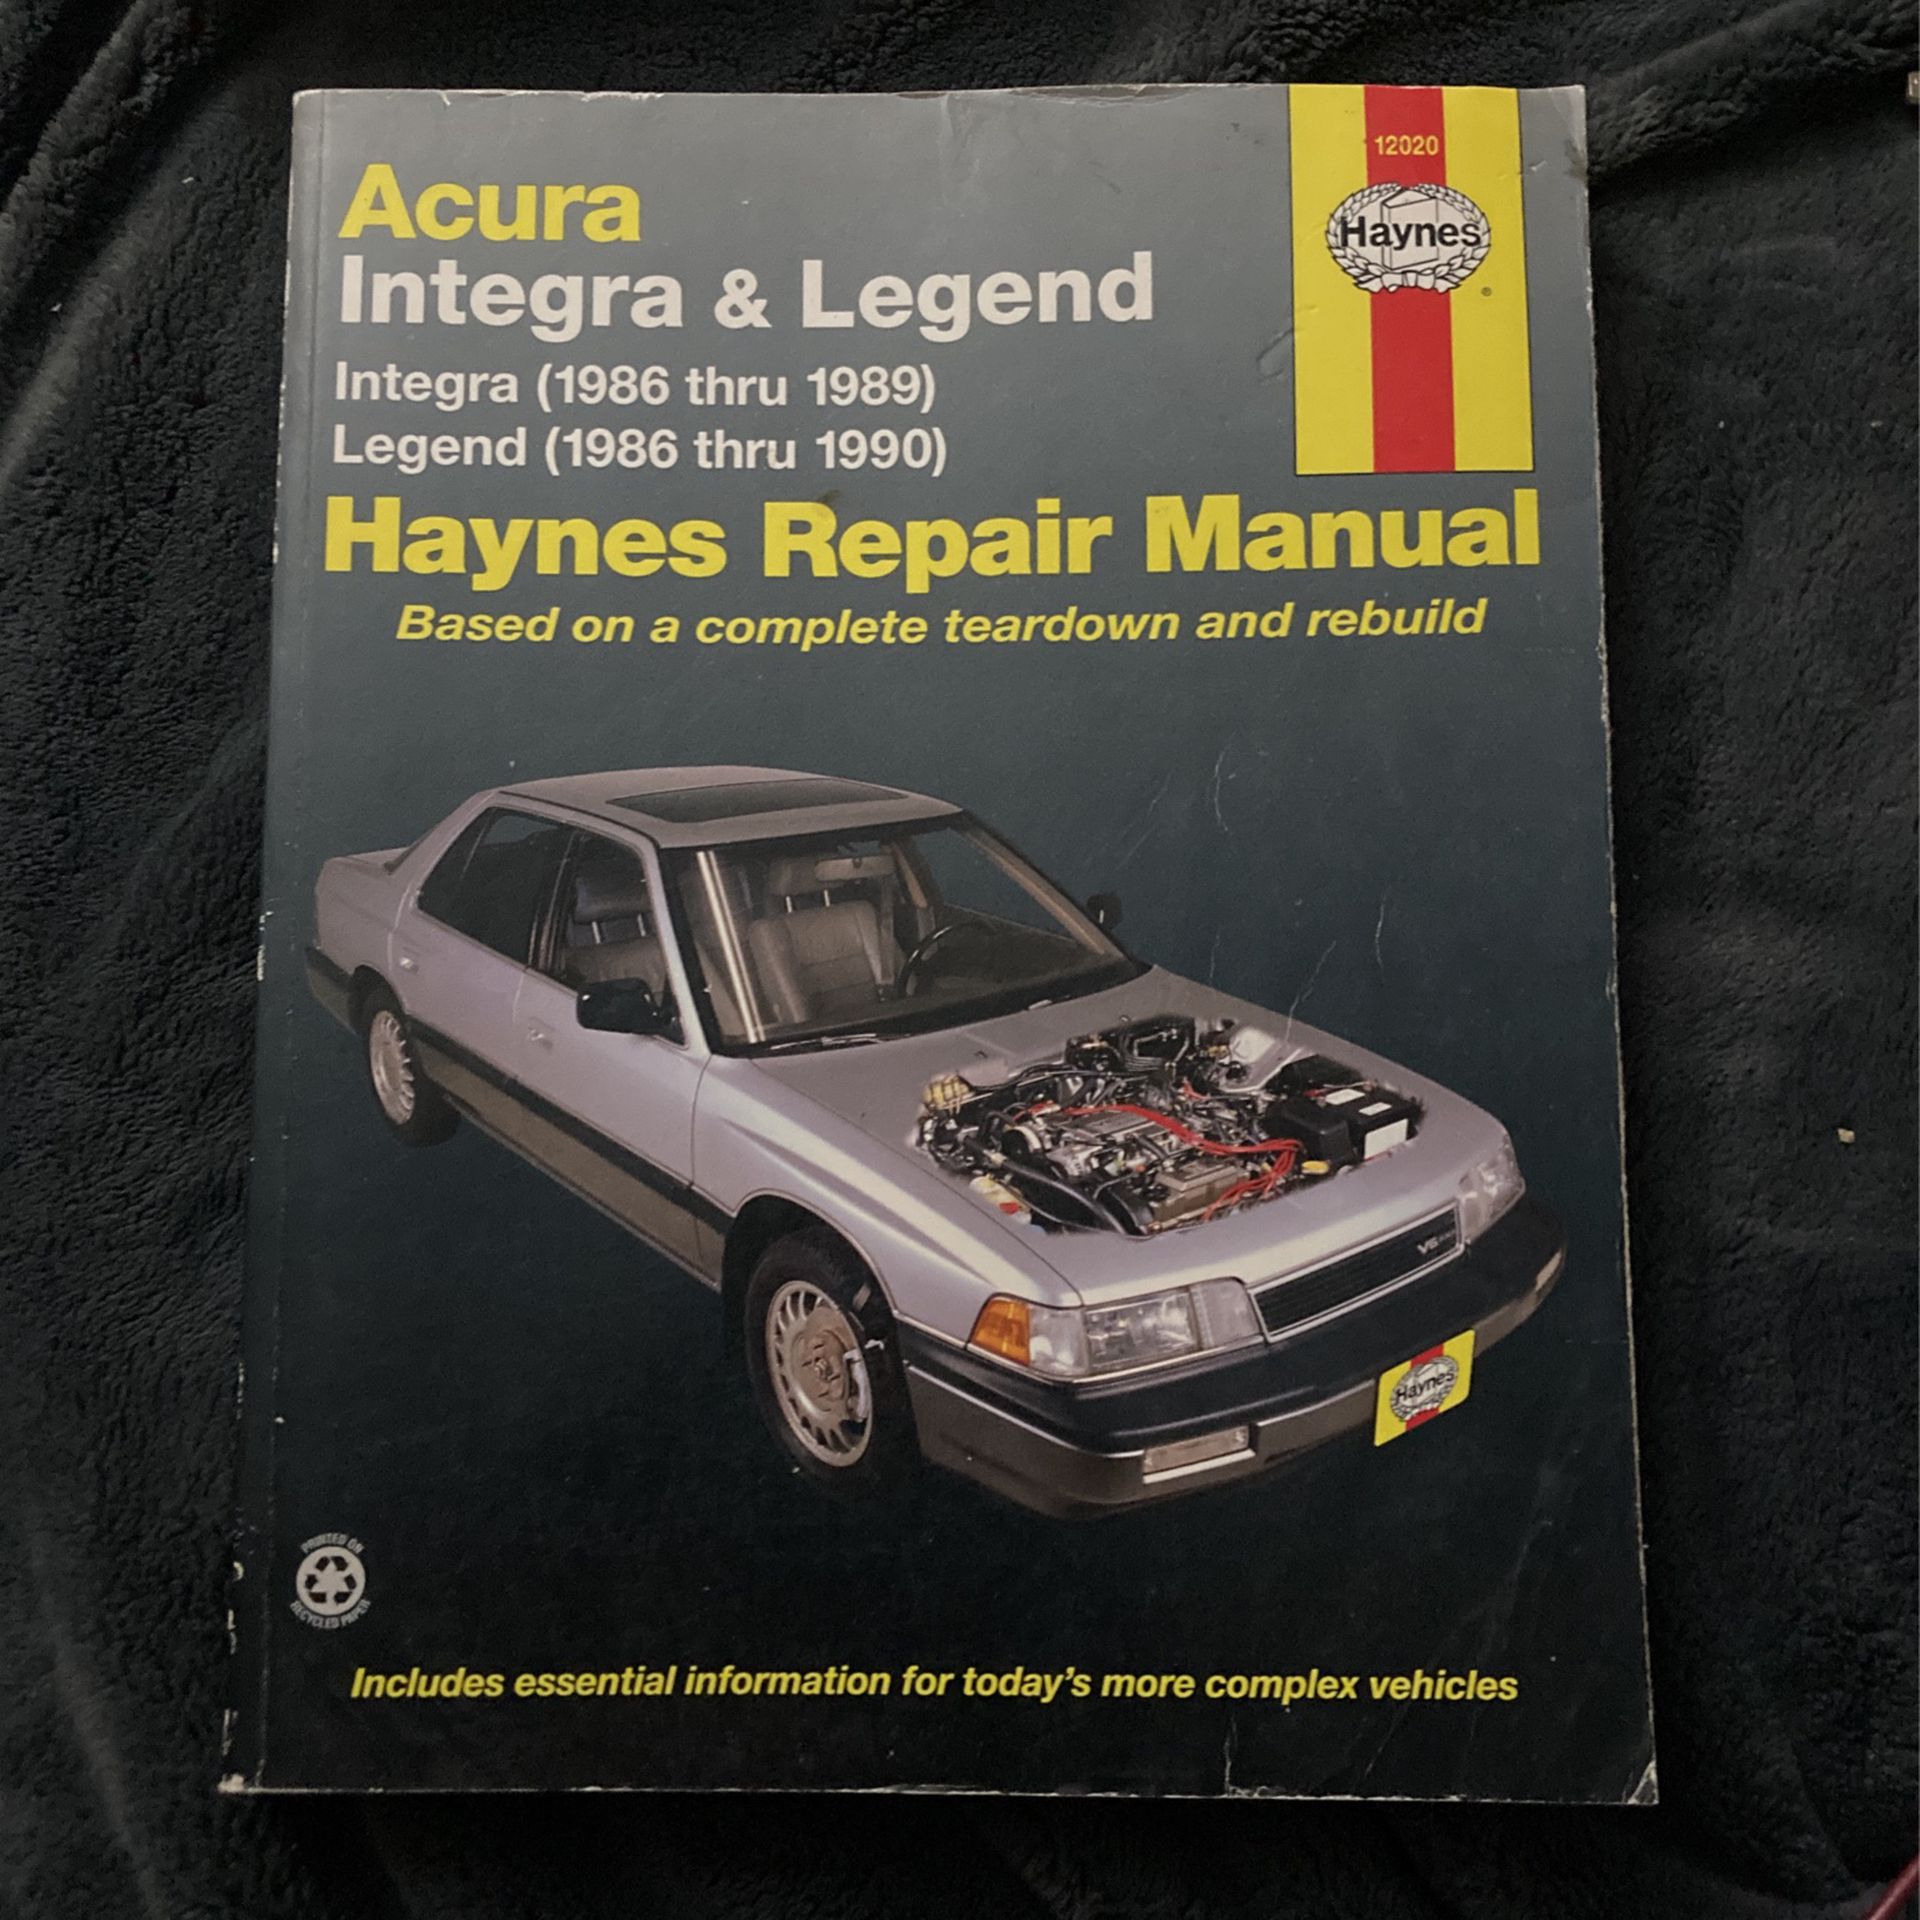 Repair Manual For Acura Integra & Legend 86-90